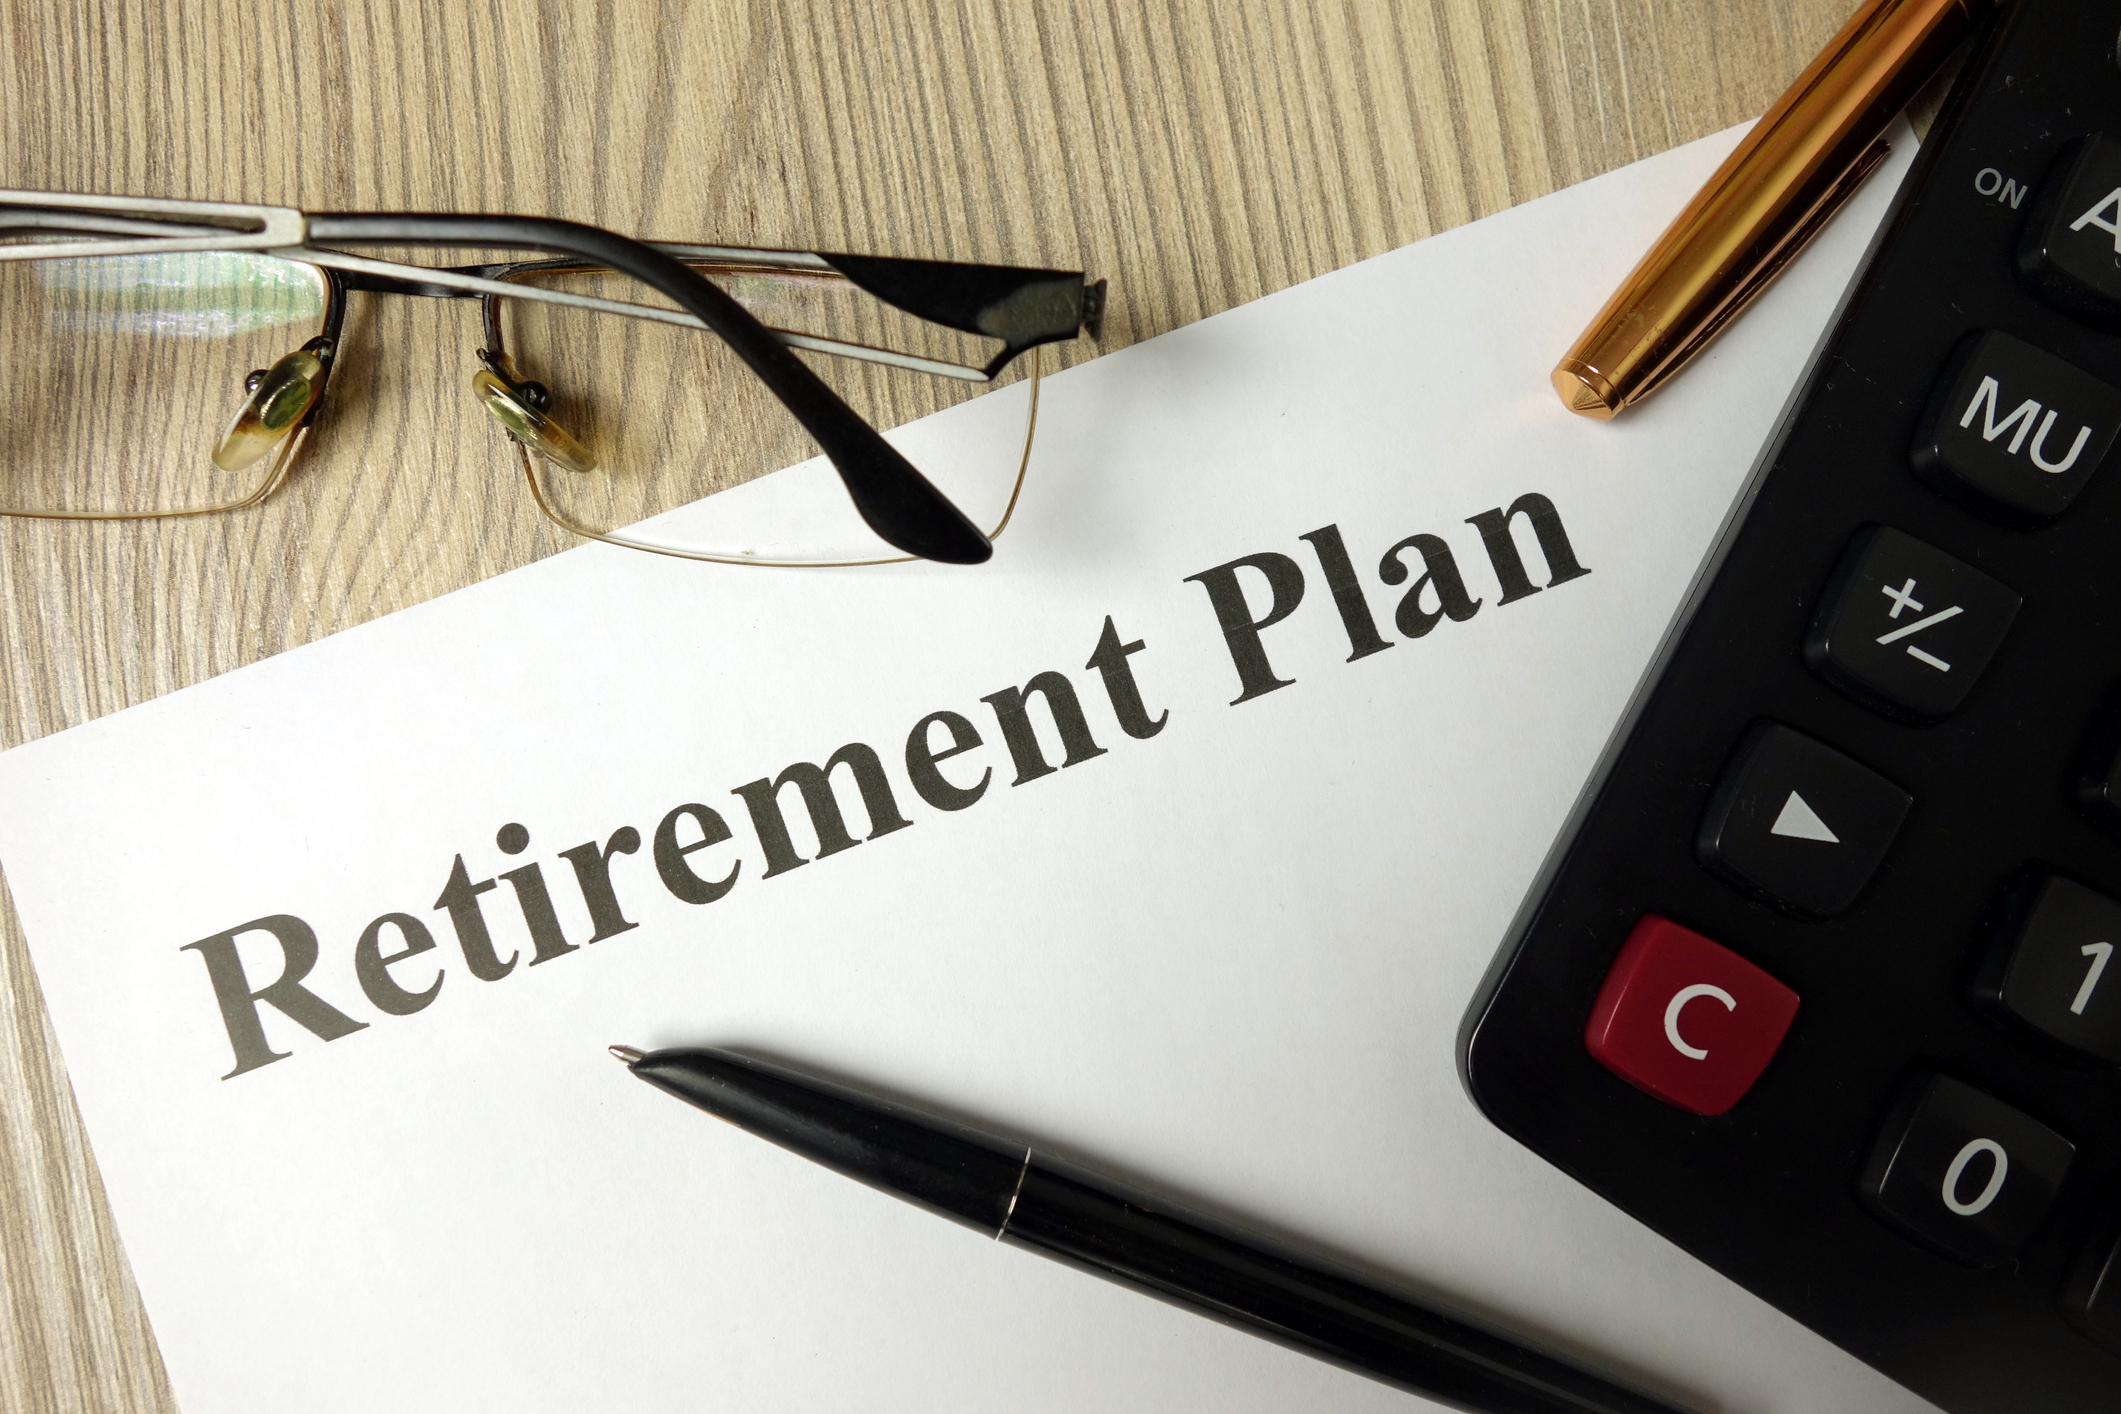 Retirement-Planning